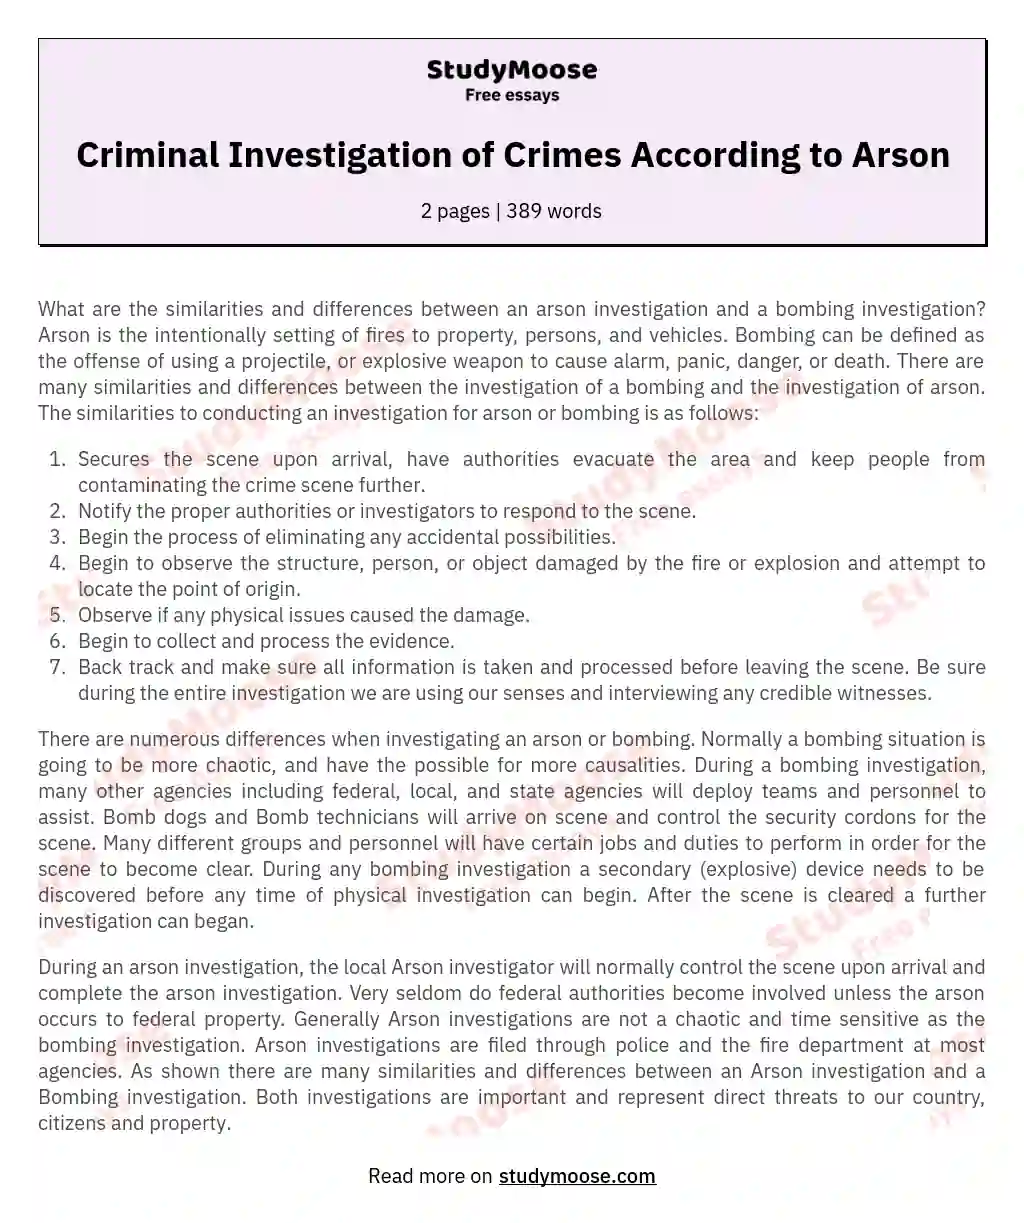 Criminal Investigation of Crimes According to Arson